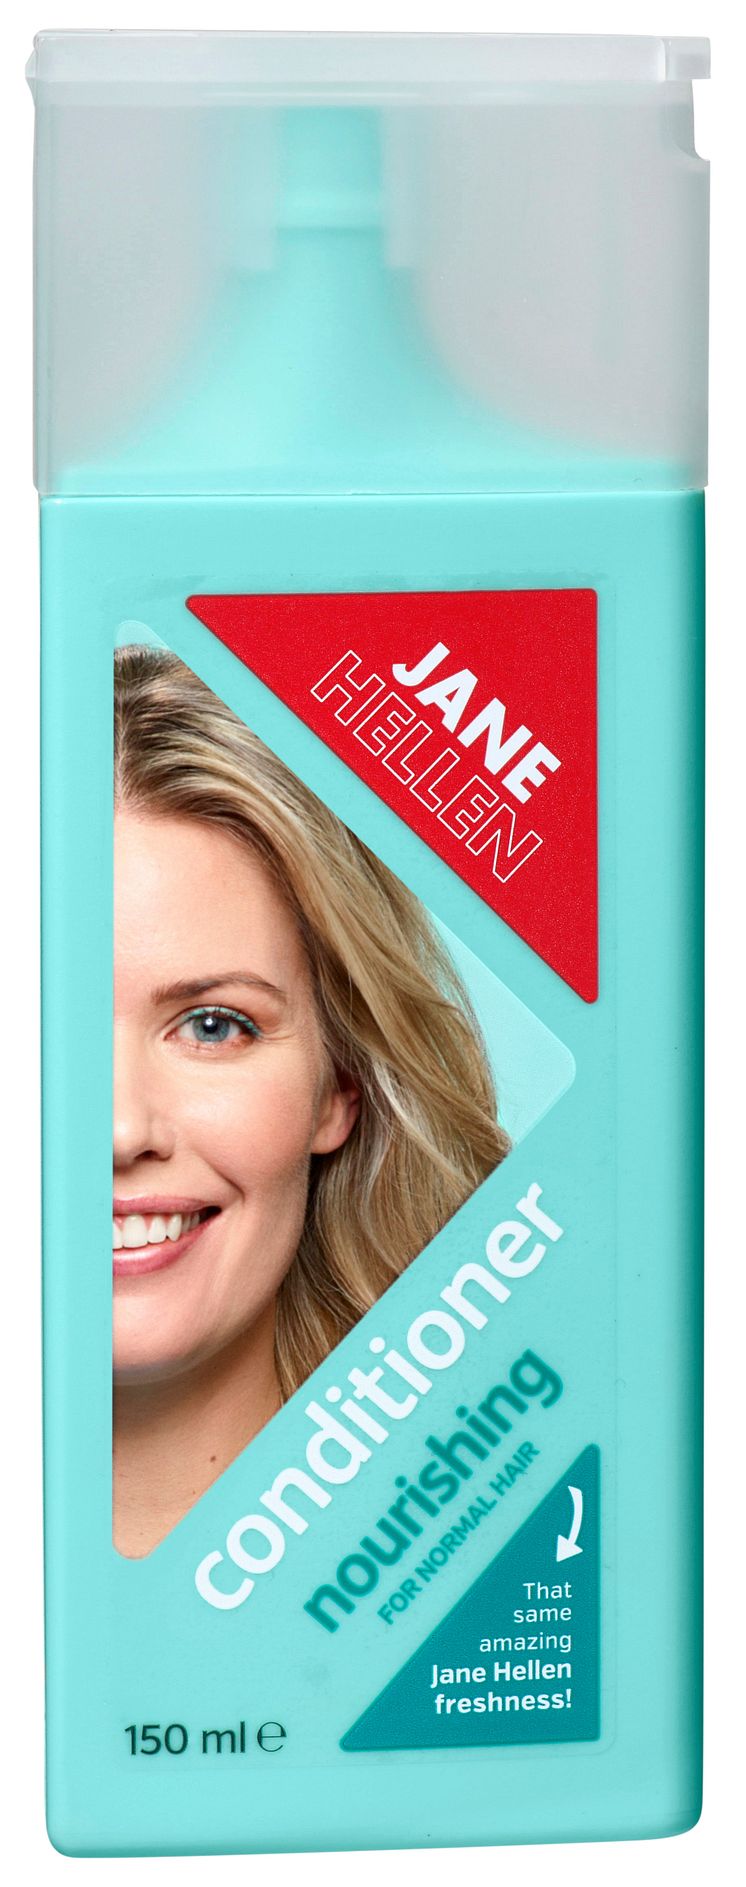 NEW! JANE HELLEN CONDITIONER FOR NORMAL HAIR 150 ML 29,90 SEK.jpg